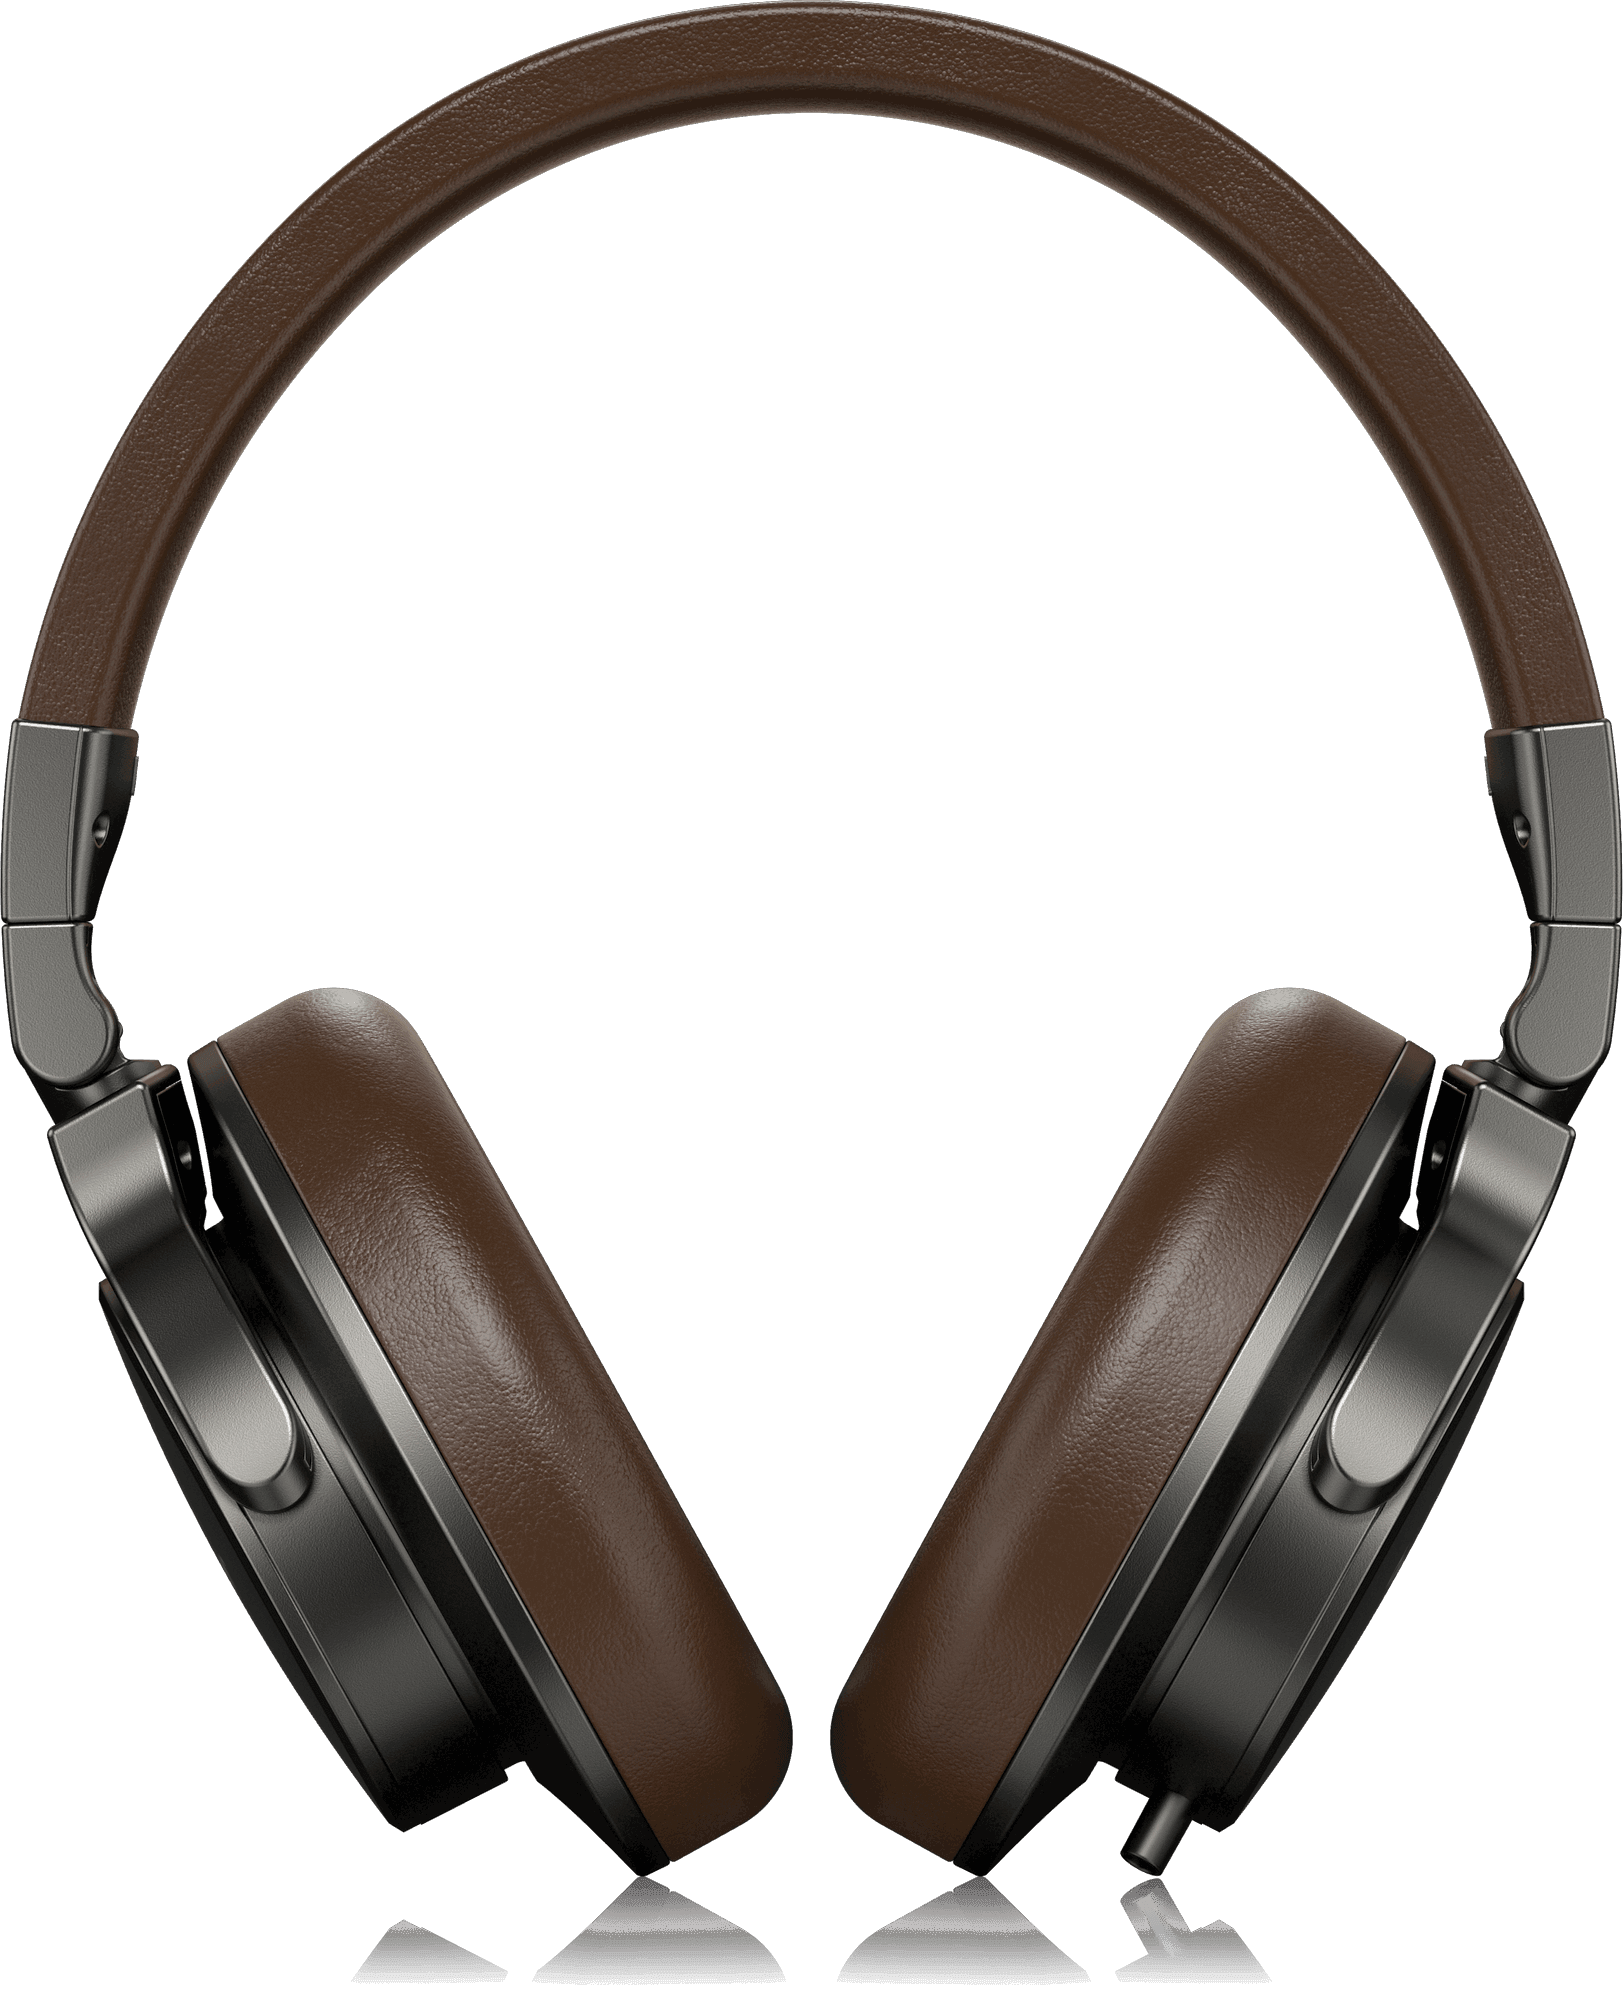 Behringer BH470 Studio Monitoring Headphones (BH 470 / BH-470) | BEHRINGER , Zoso Music